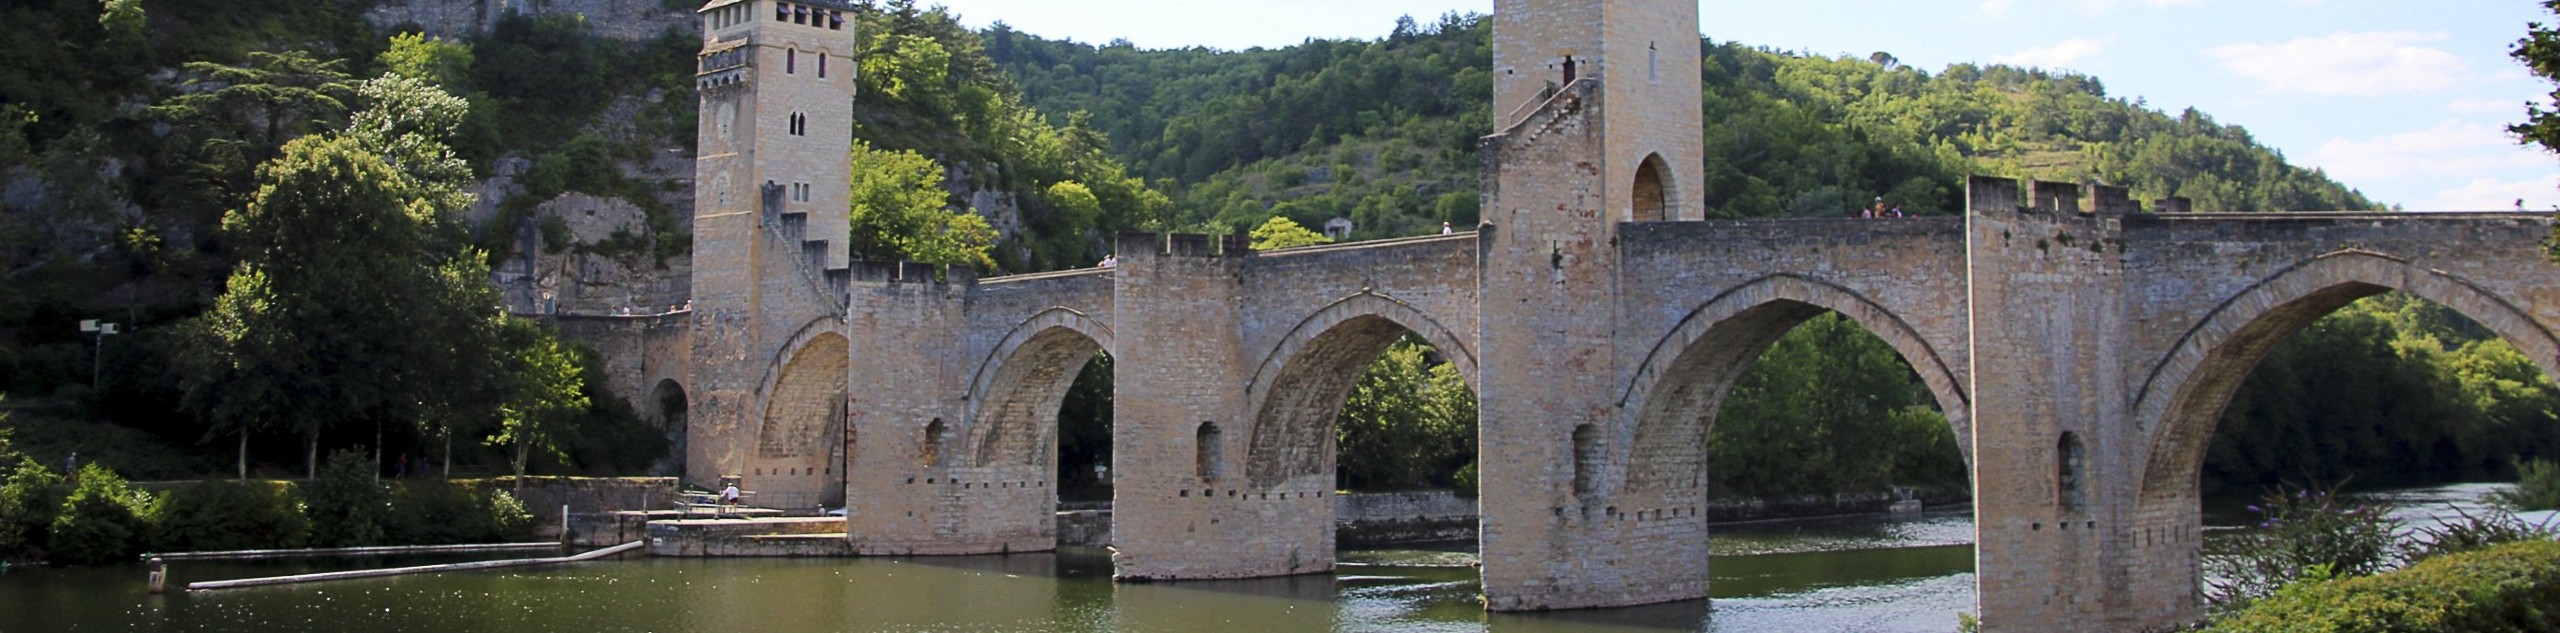 Valentre Bridge in Cahors, France